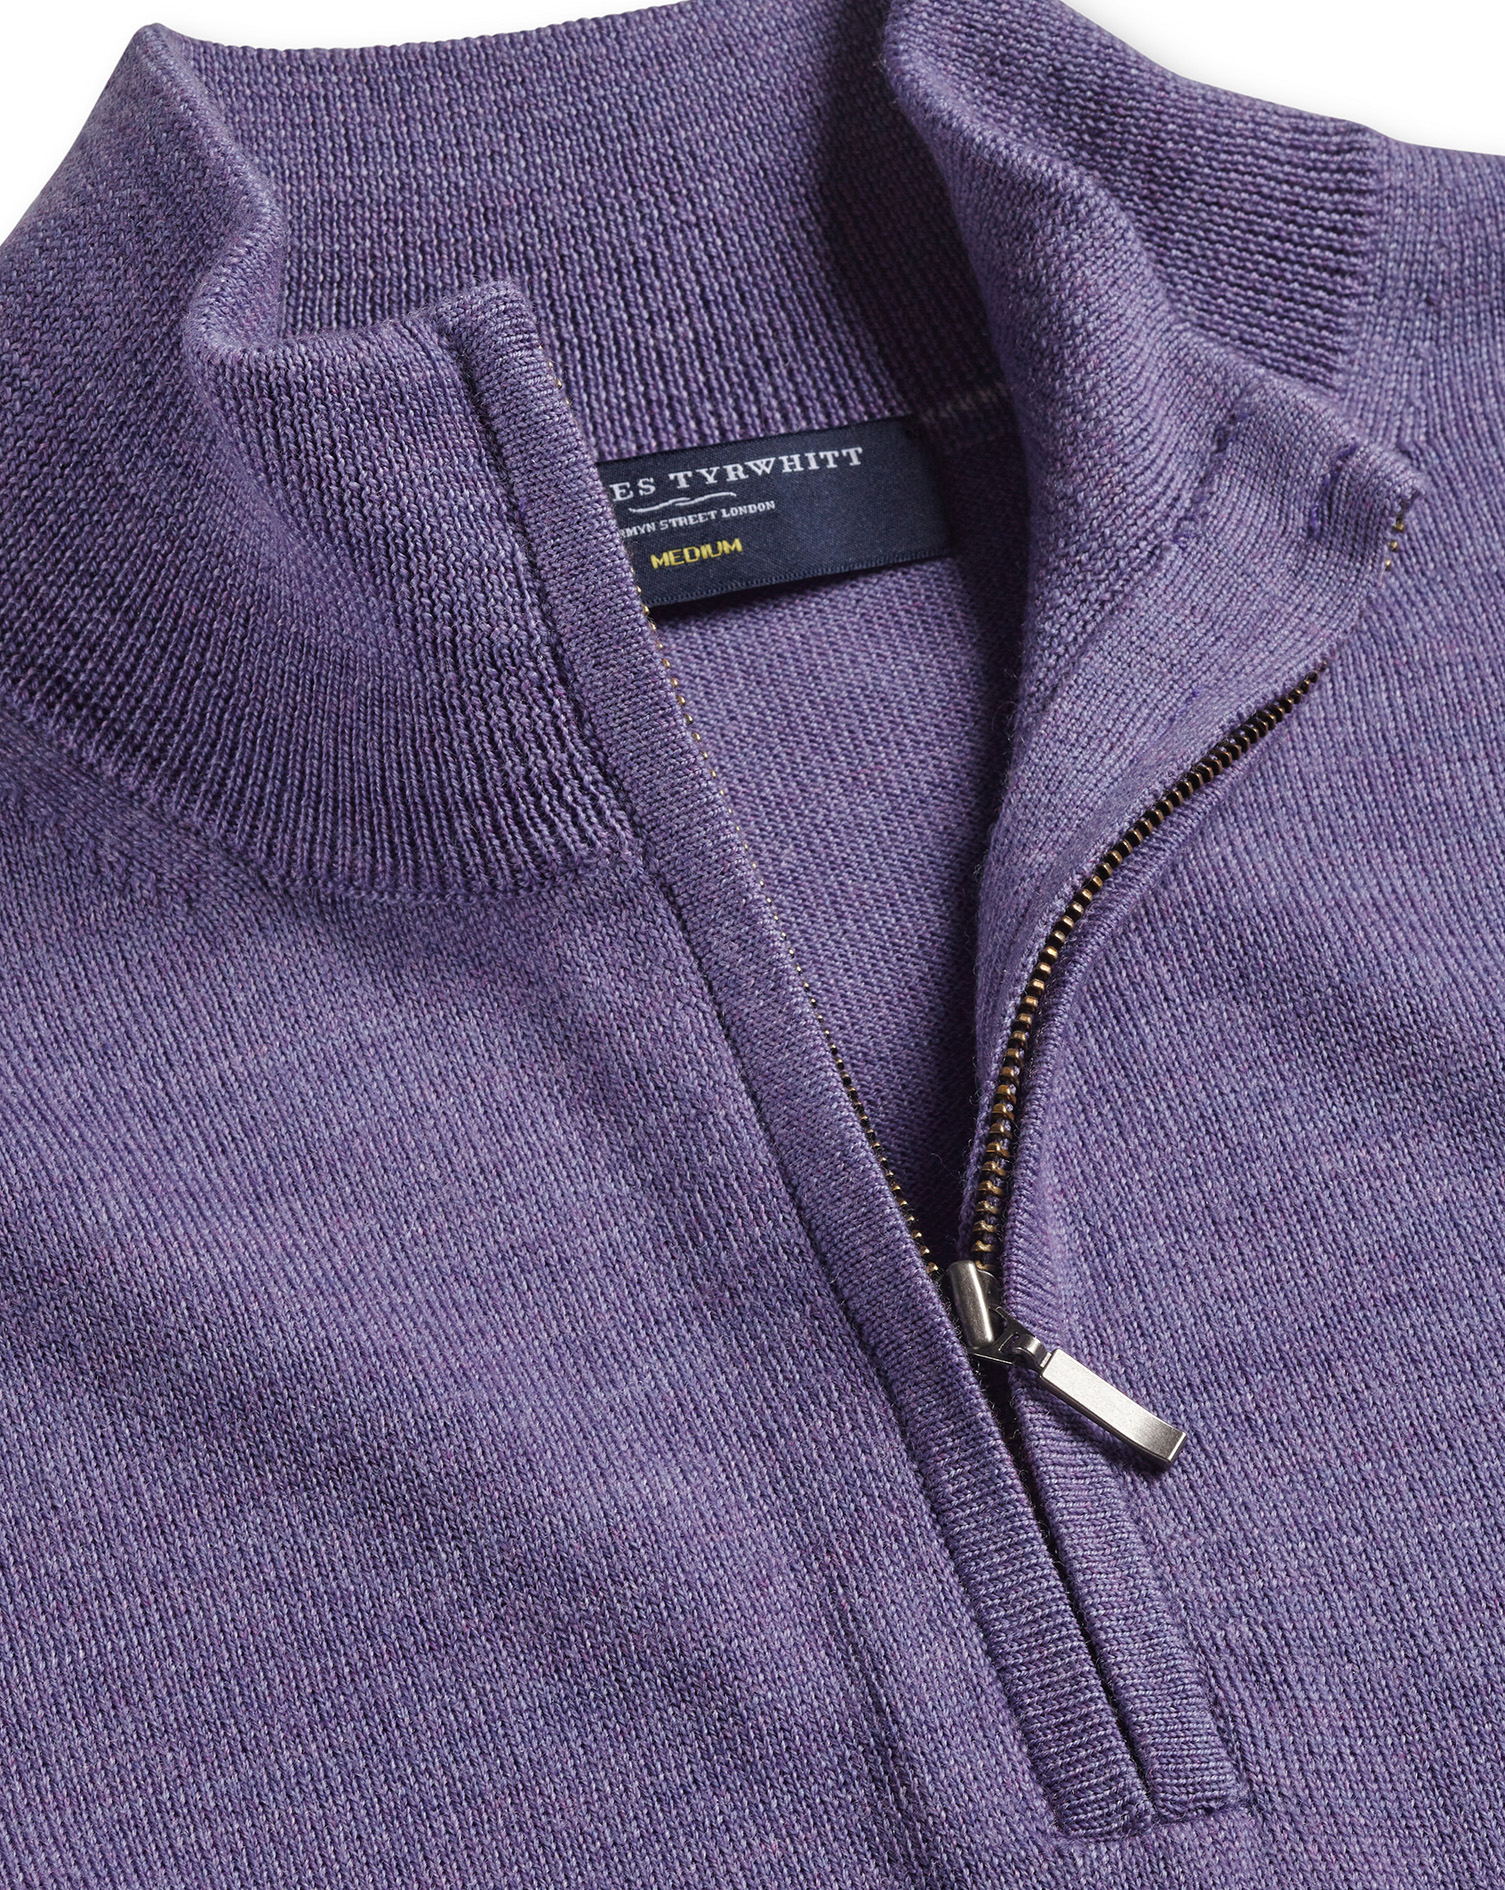 Men's Charles Tyrwhitt England Rugby Merino Zip-Neck Sweater - Lilac Purple Size Large Wool
